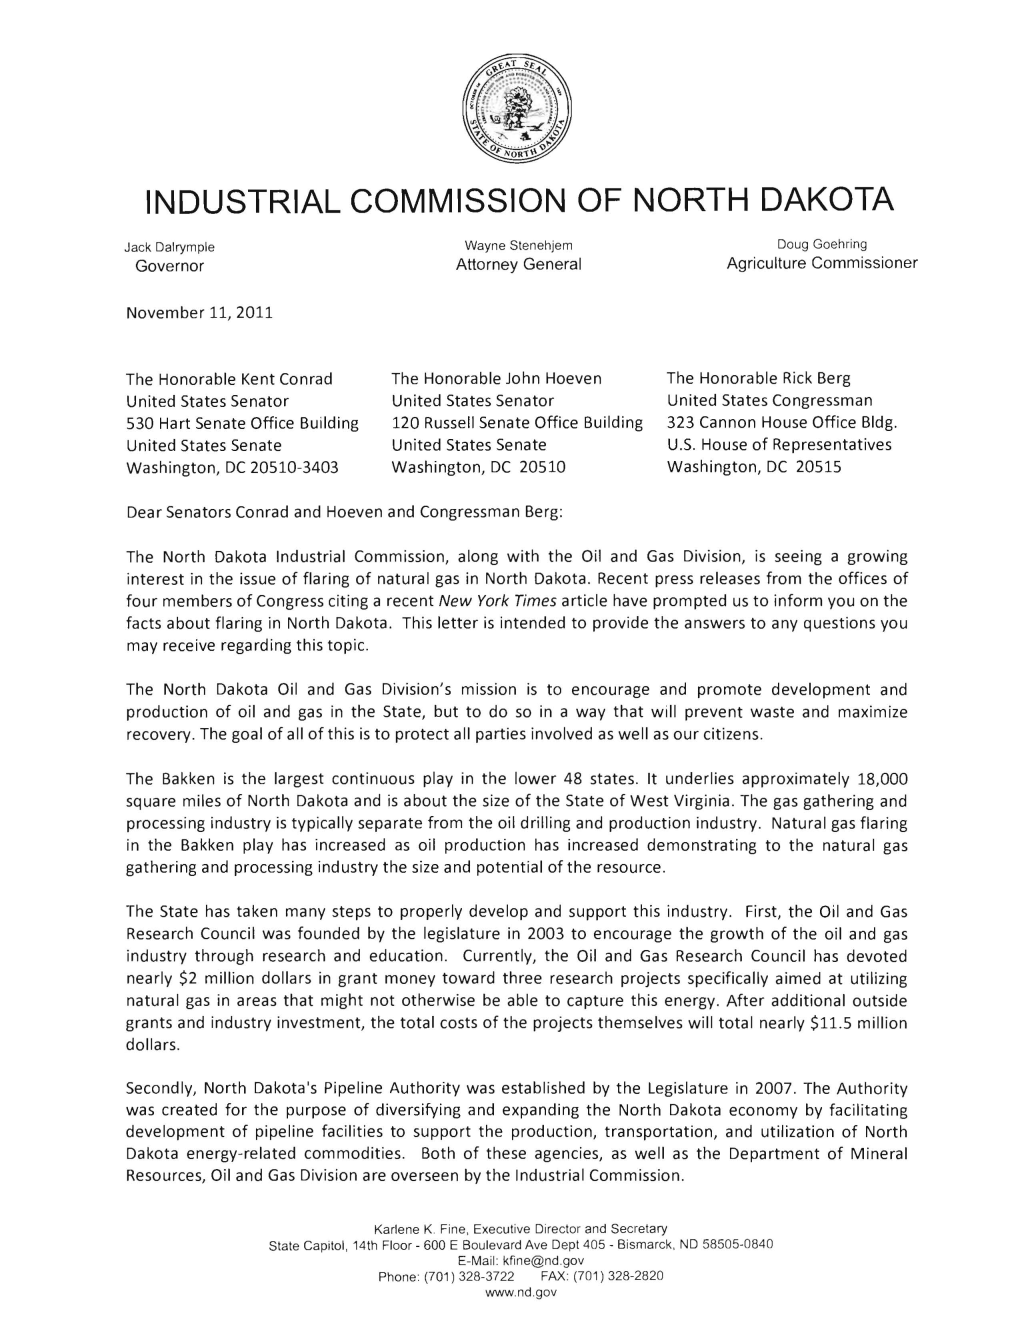 Industrial Commission of North Dakota